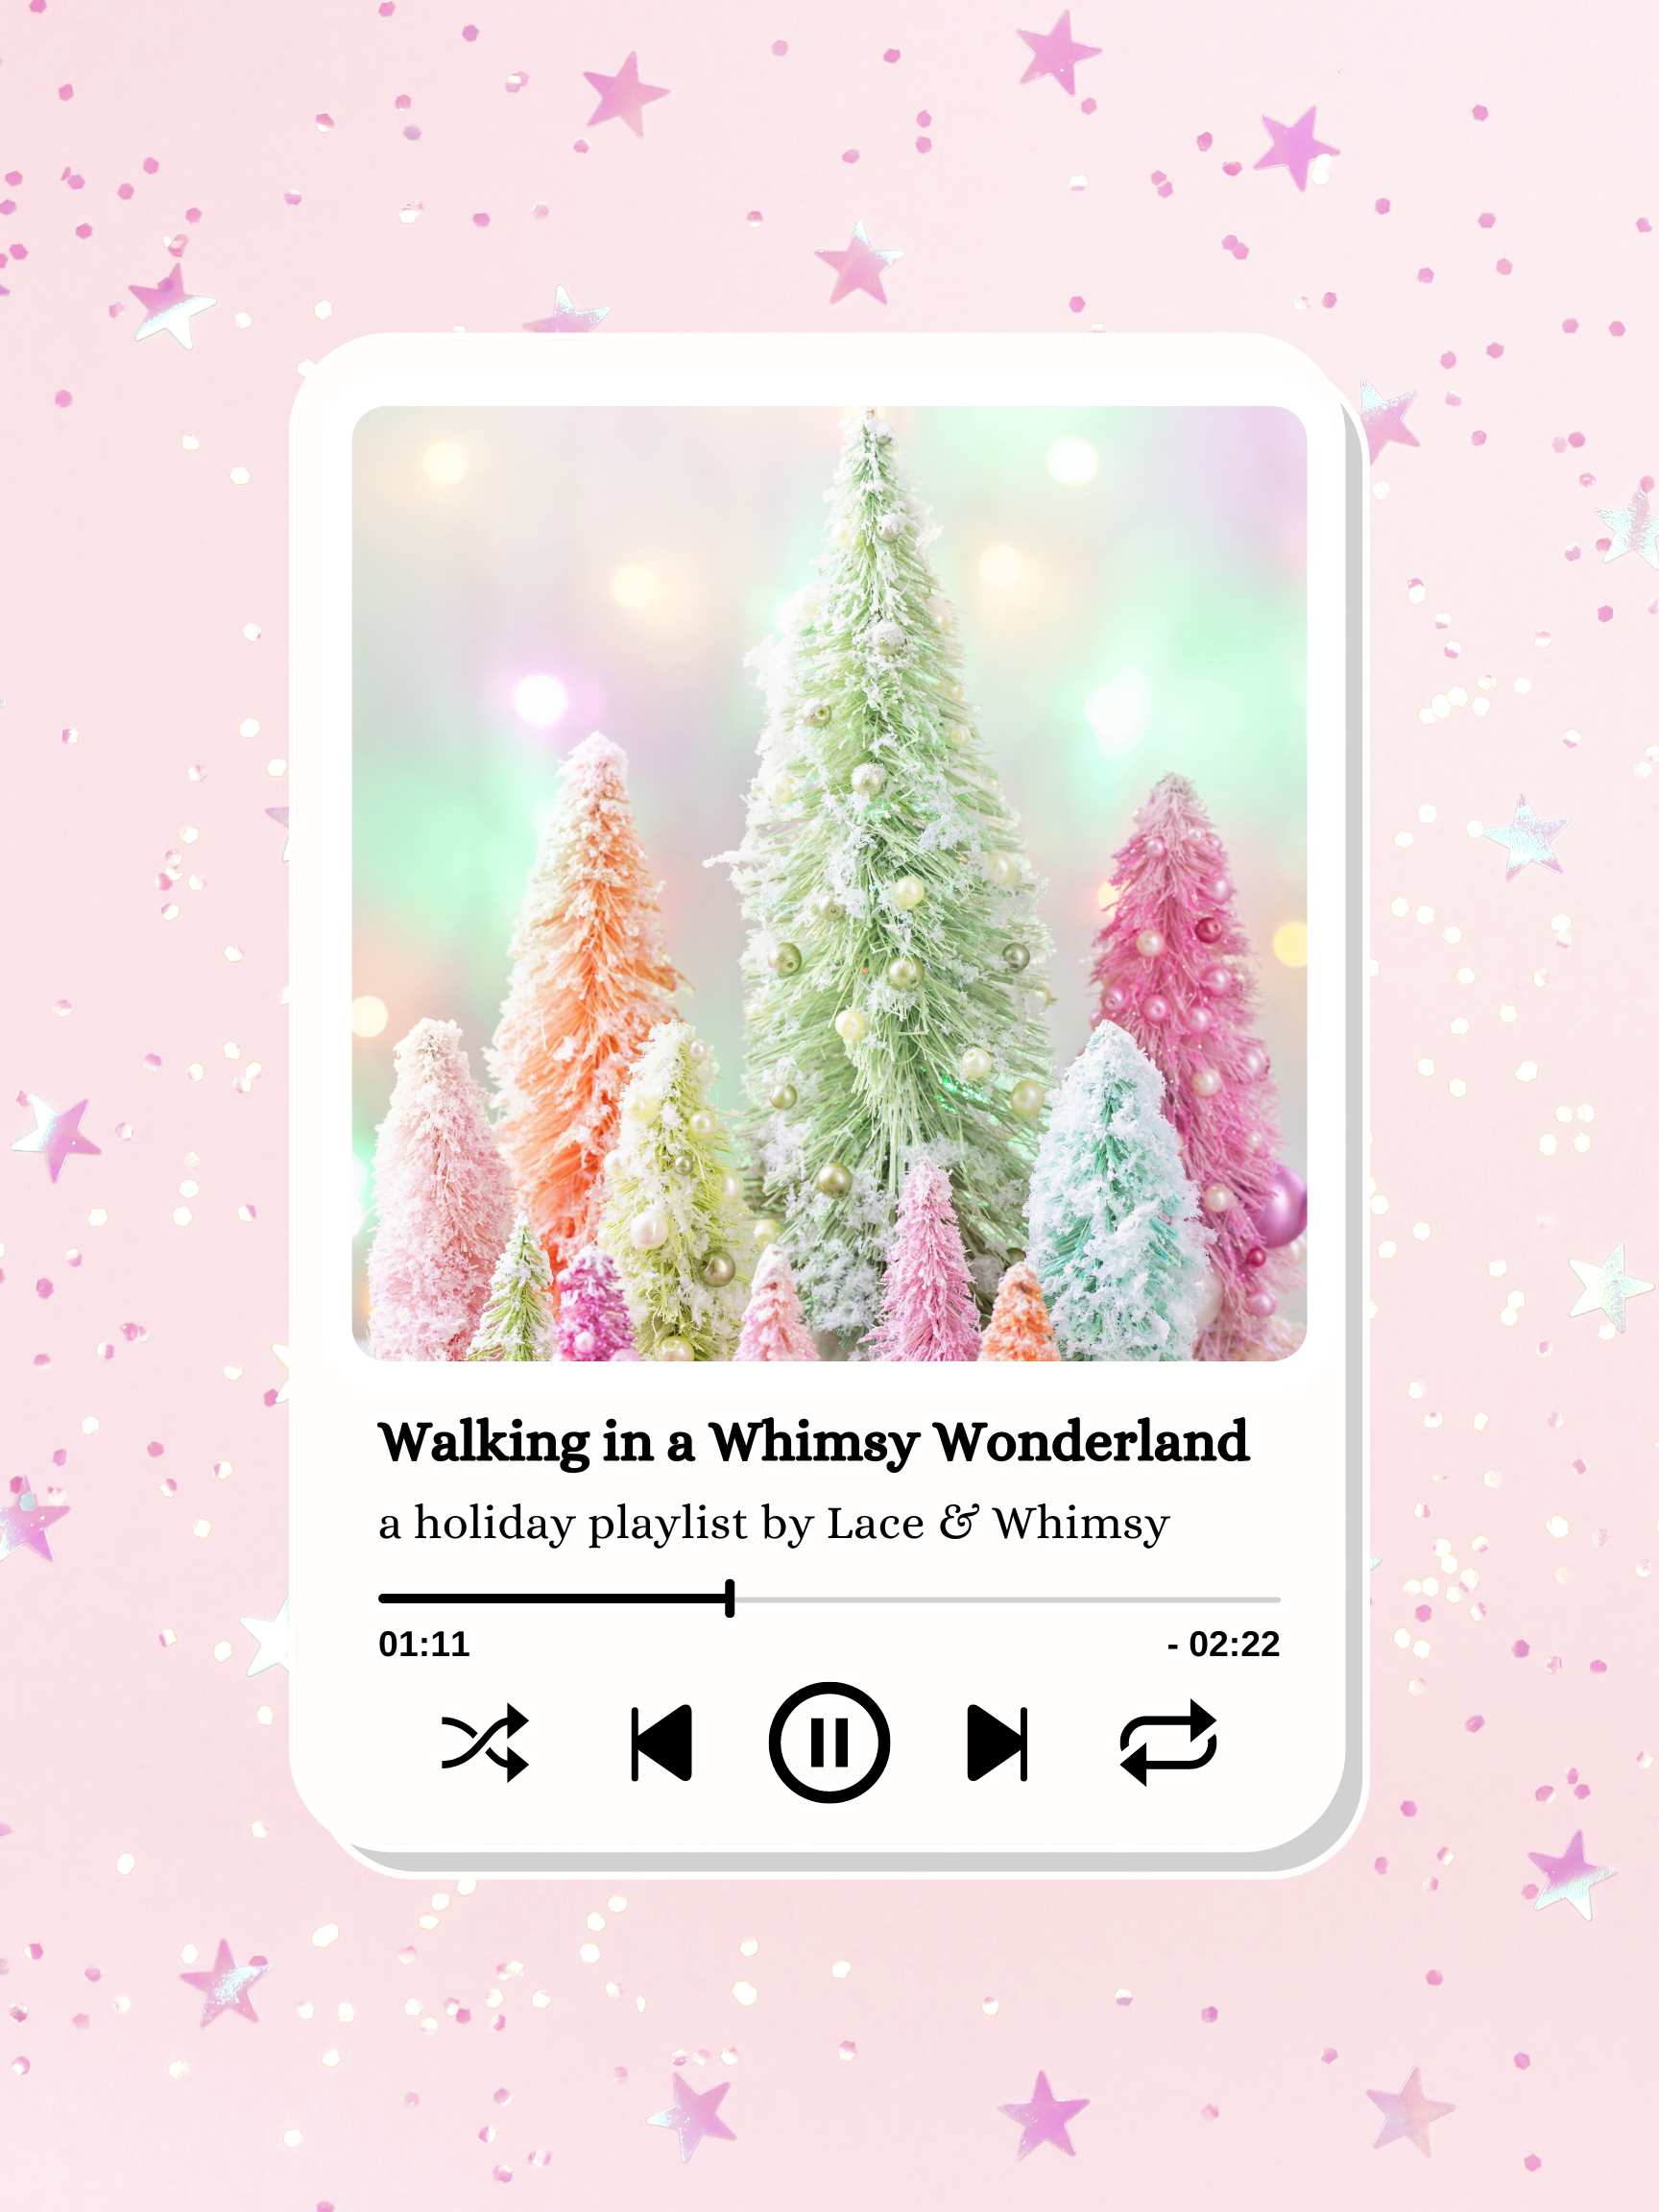 11 Holiday Albums To Listen To This Christmas Season